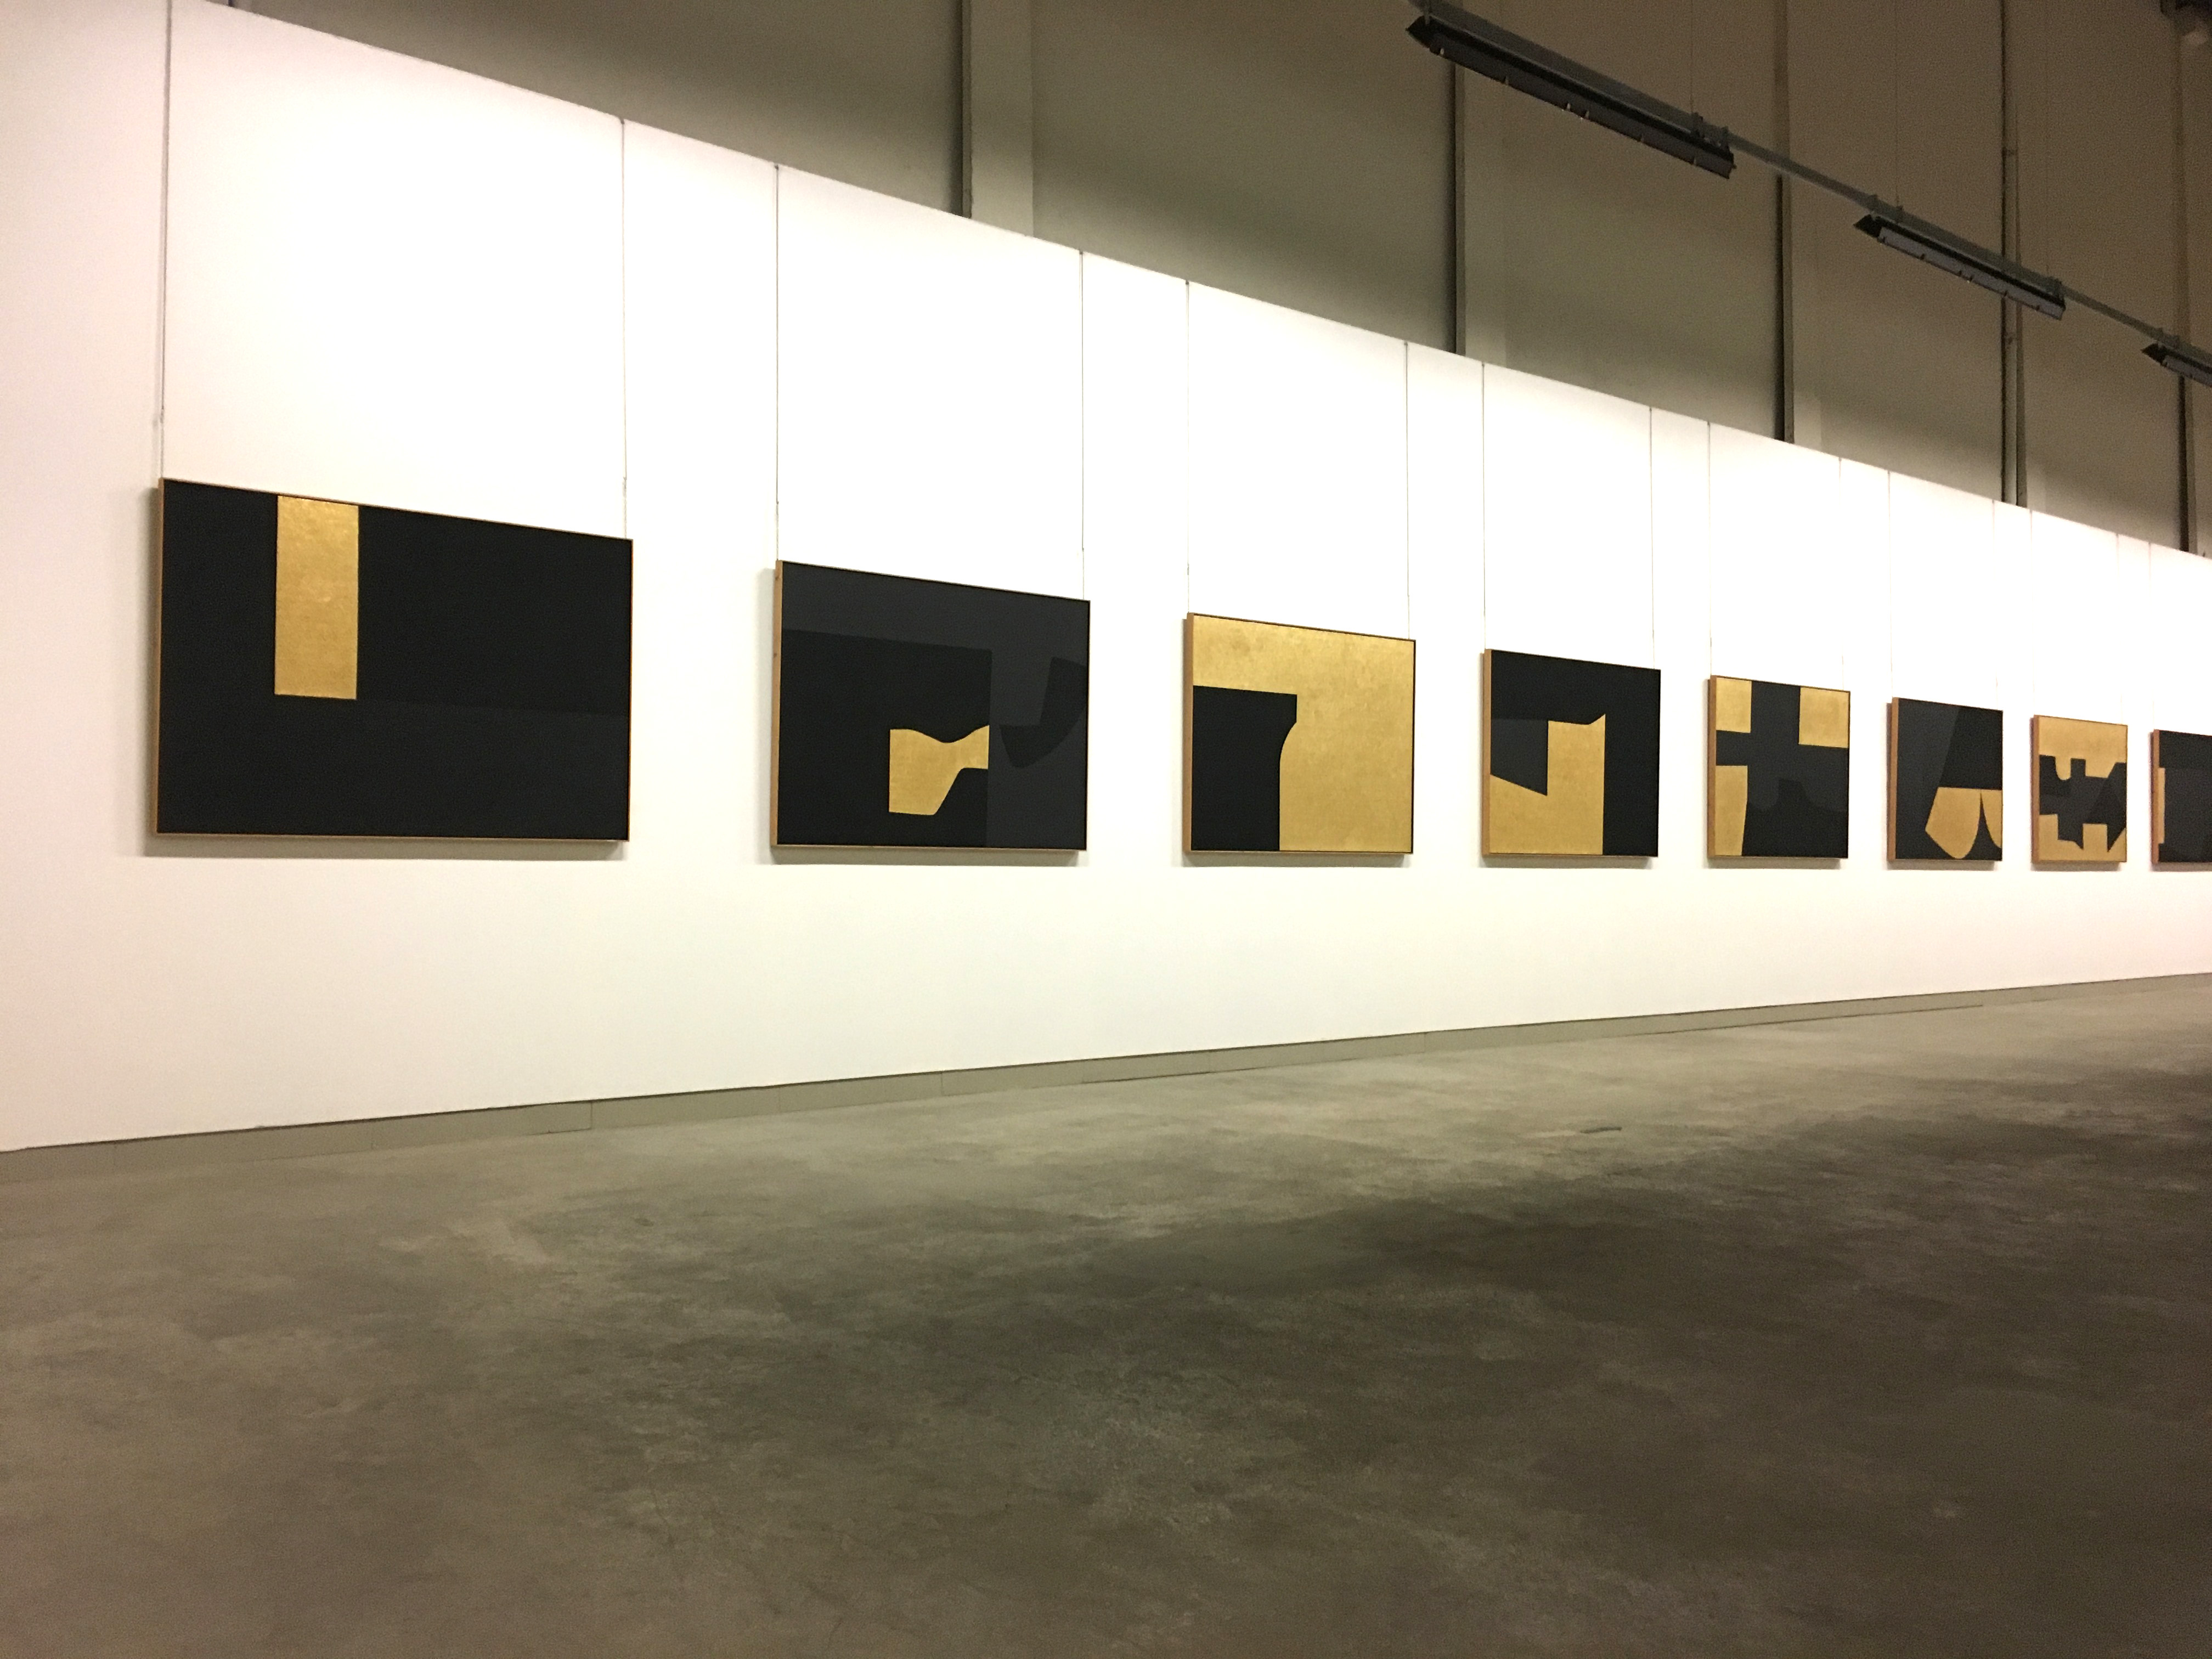 Gold and black artworks Alberto Burri